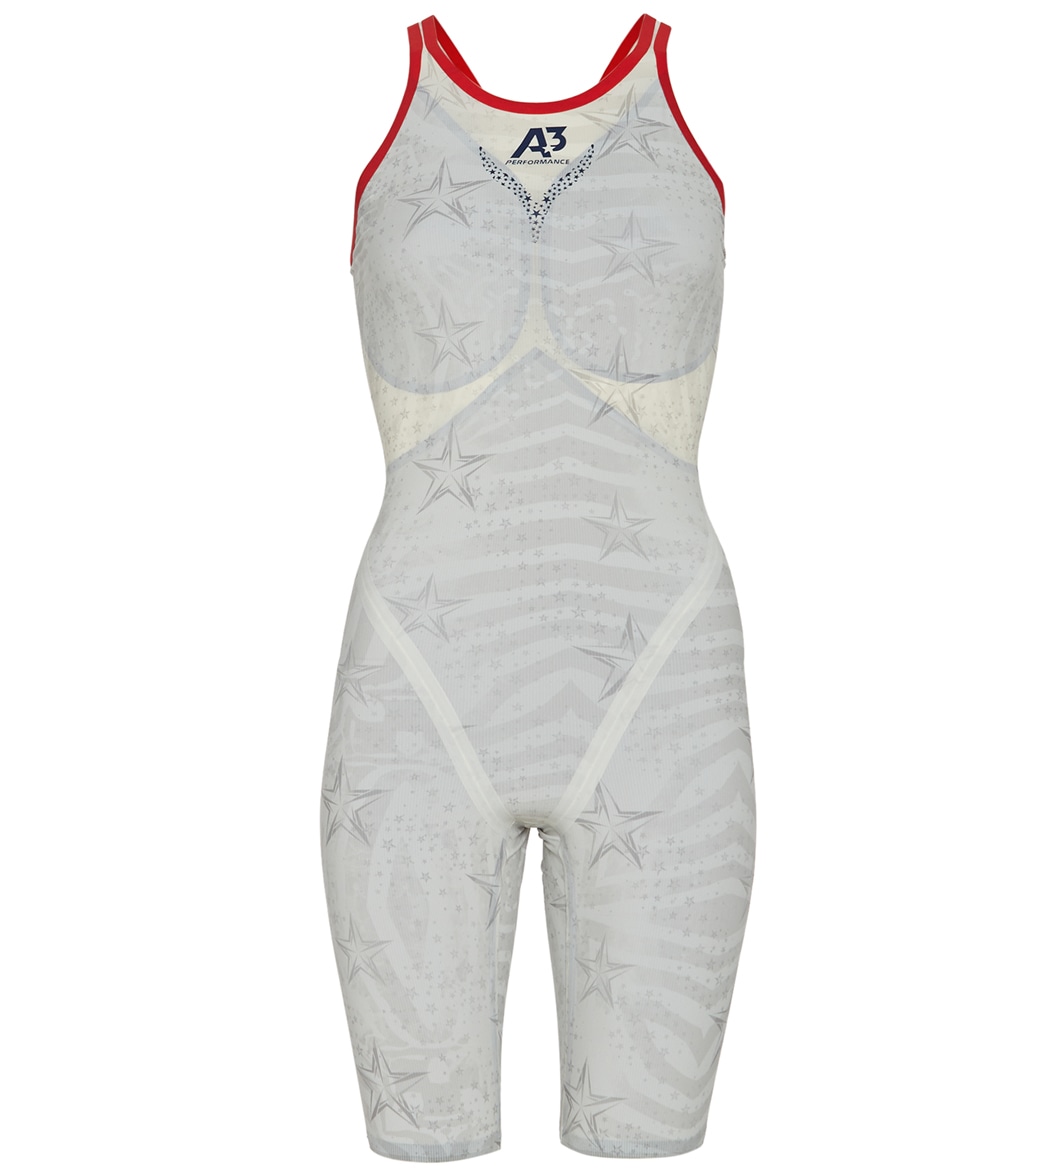 A3 Performance Women's Phenom Closed Back Tech Suit Swimsuit - White 22 Elastane/Polyamide - Swimoutlet.com